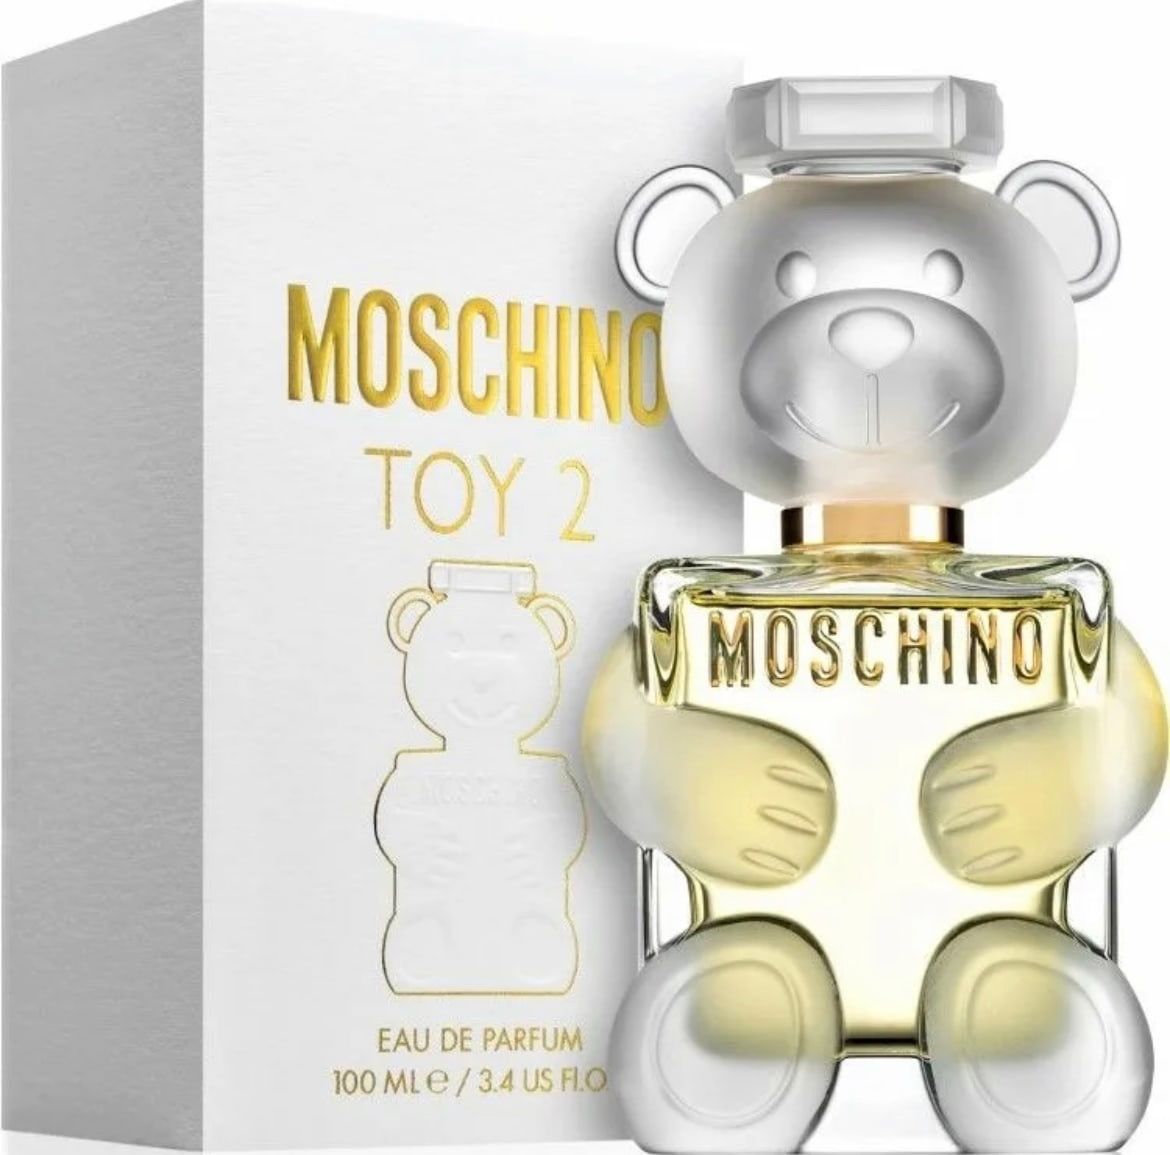 Moschino парфюмерная вода цена. Moschino Toy 2 w EDP 50 ml. Moschino Toy 2 EDP 100 ml. Москино той 2 туалетная вода 30 мл. Moschino 30 ml.